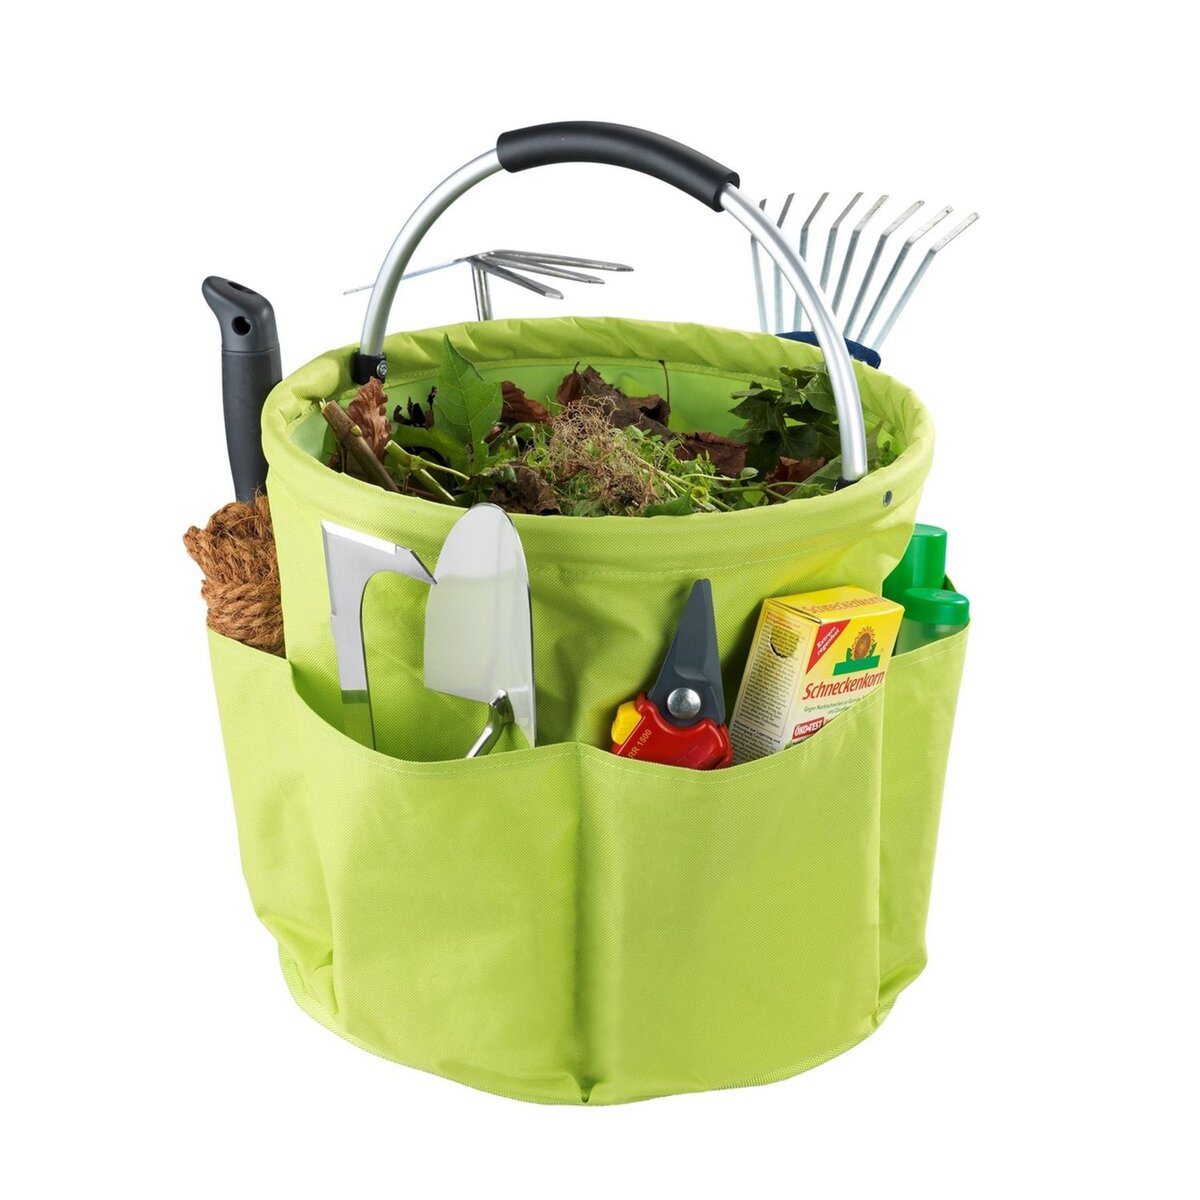 Wenko Sac de transport XL pour ustensiles de jardinage - Vert pas cher 